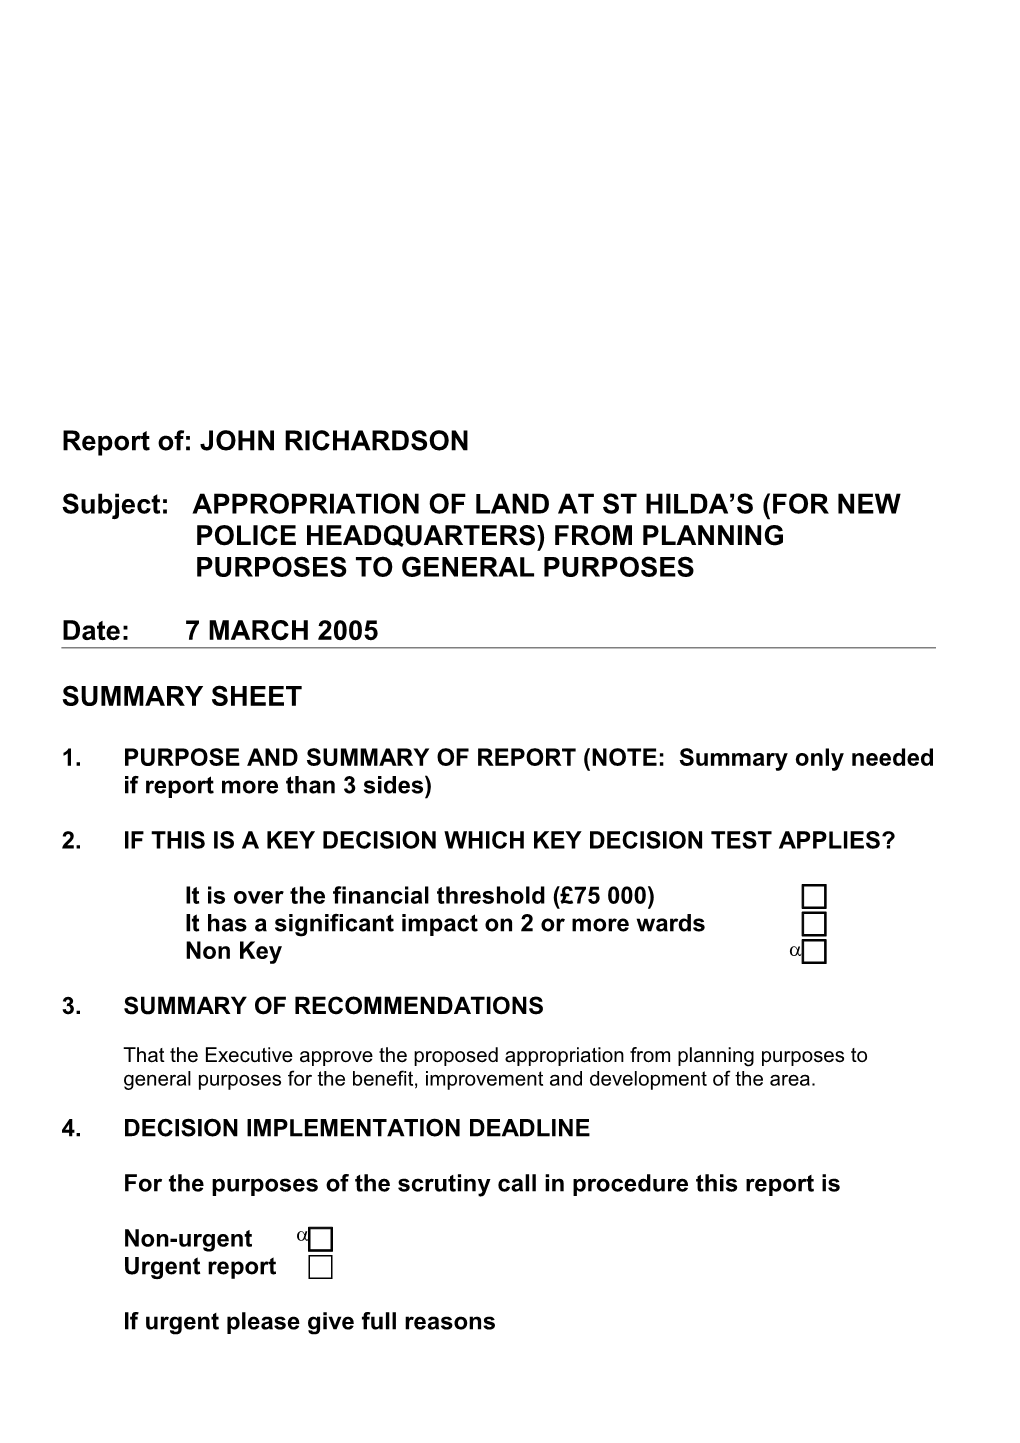 Report Of: JOHN RICHARDSON